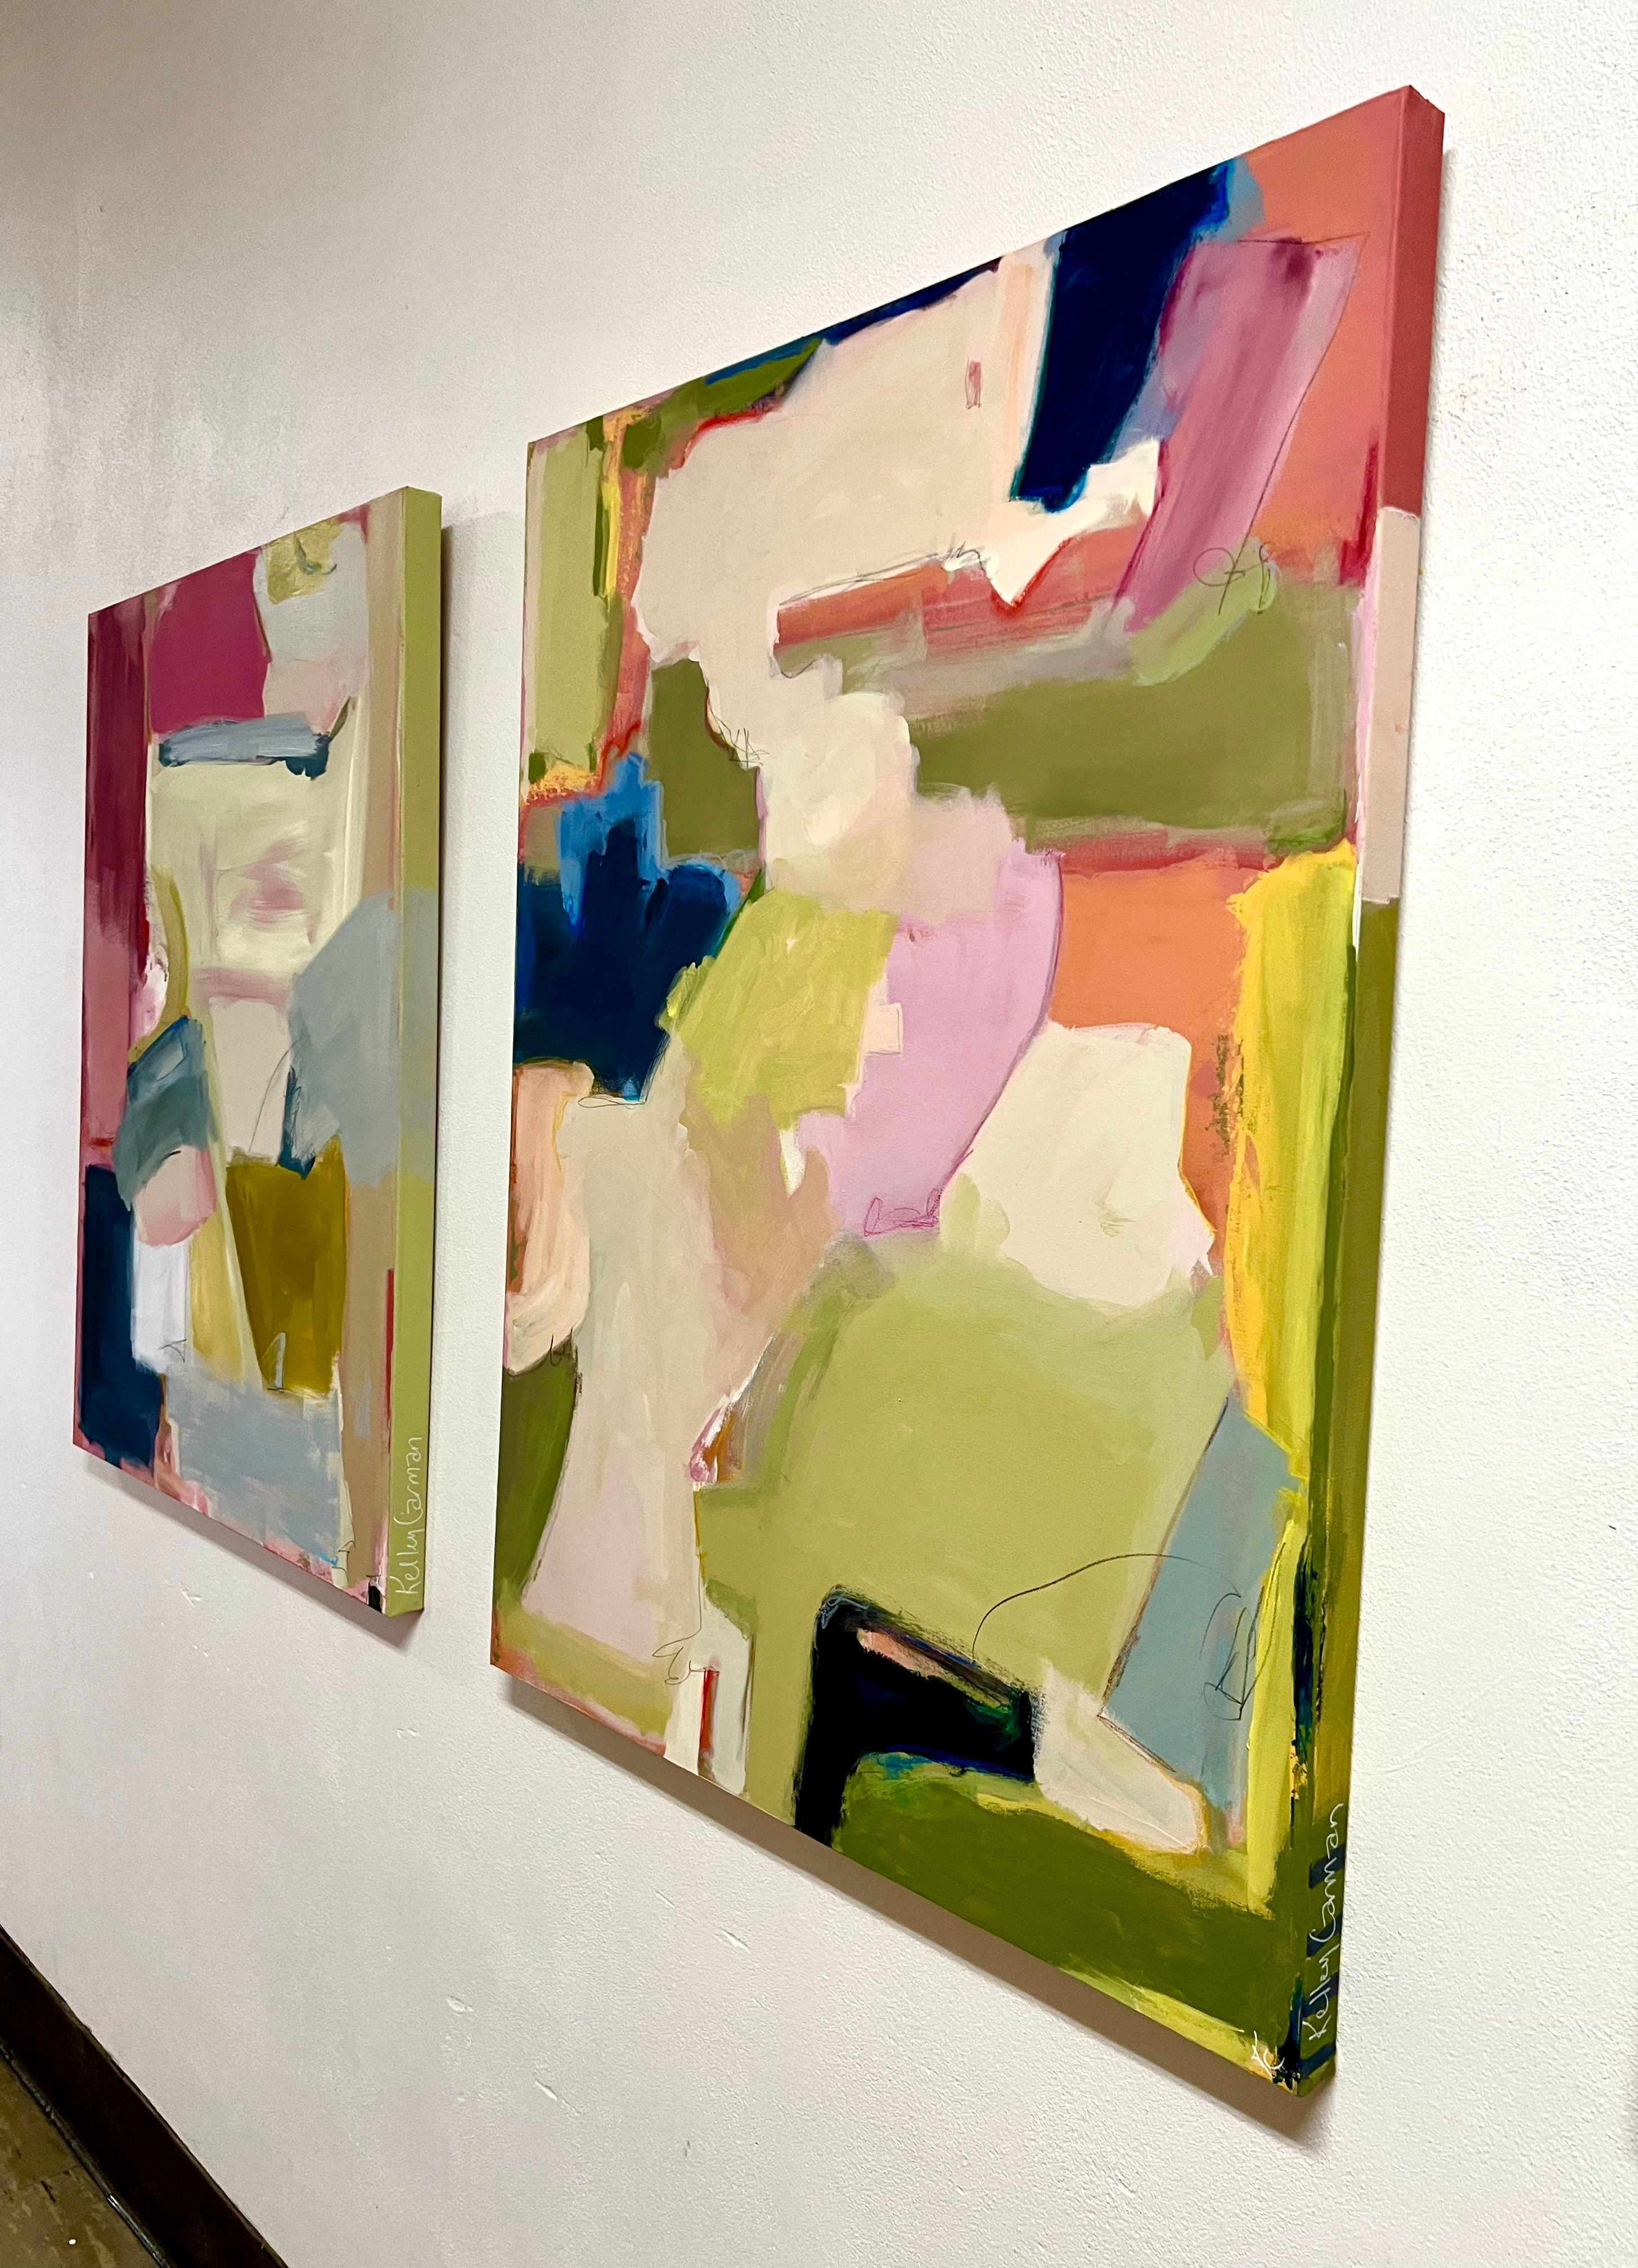 Make Up My Mind (Abstrakt, Gestal, Marineblau, Rosa, Grün) (Abstrakter Expressionismus), Painting, von Kelley Carman